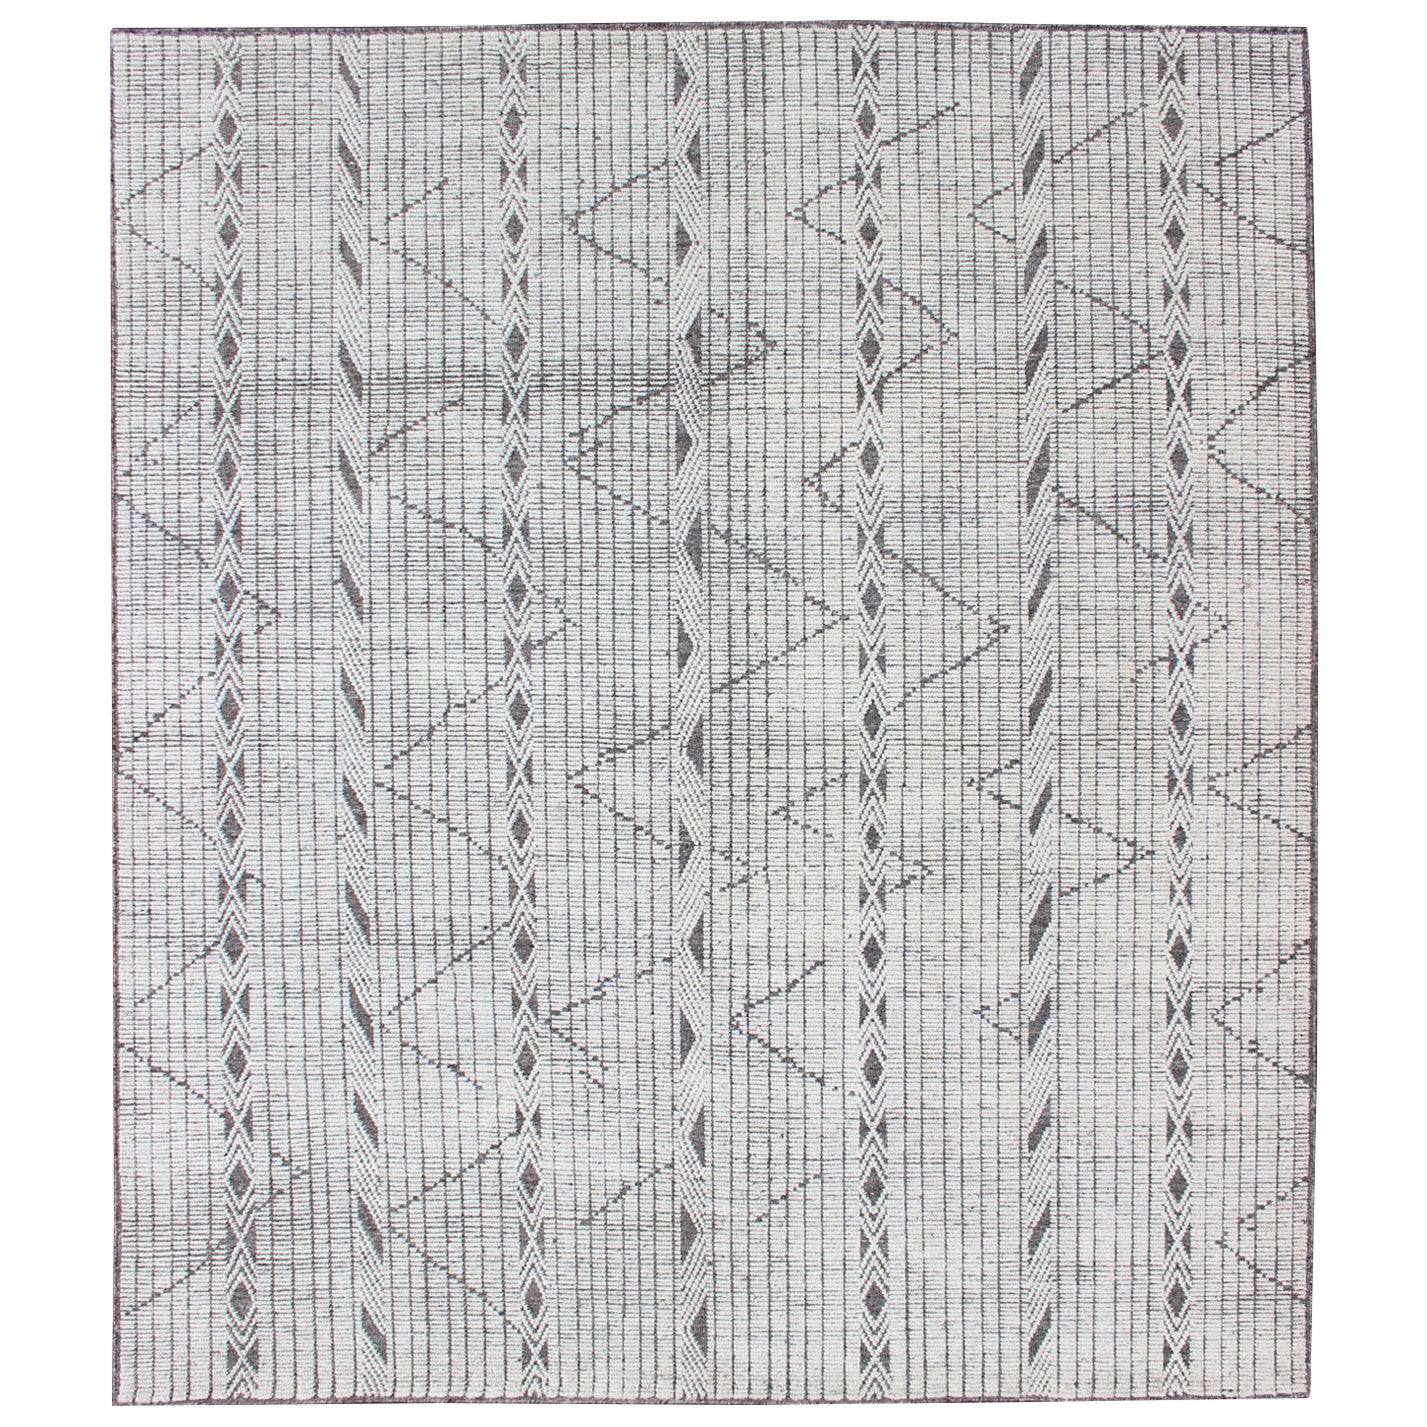 The Moderns Minimalist Hand-Knotted Wool Rugs in Off-White, Gray and Brown Colors (Tapis moderne minimaliste en laine nouée à la main aux couleurs blanc cassé, gris et Brown)